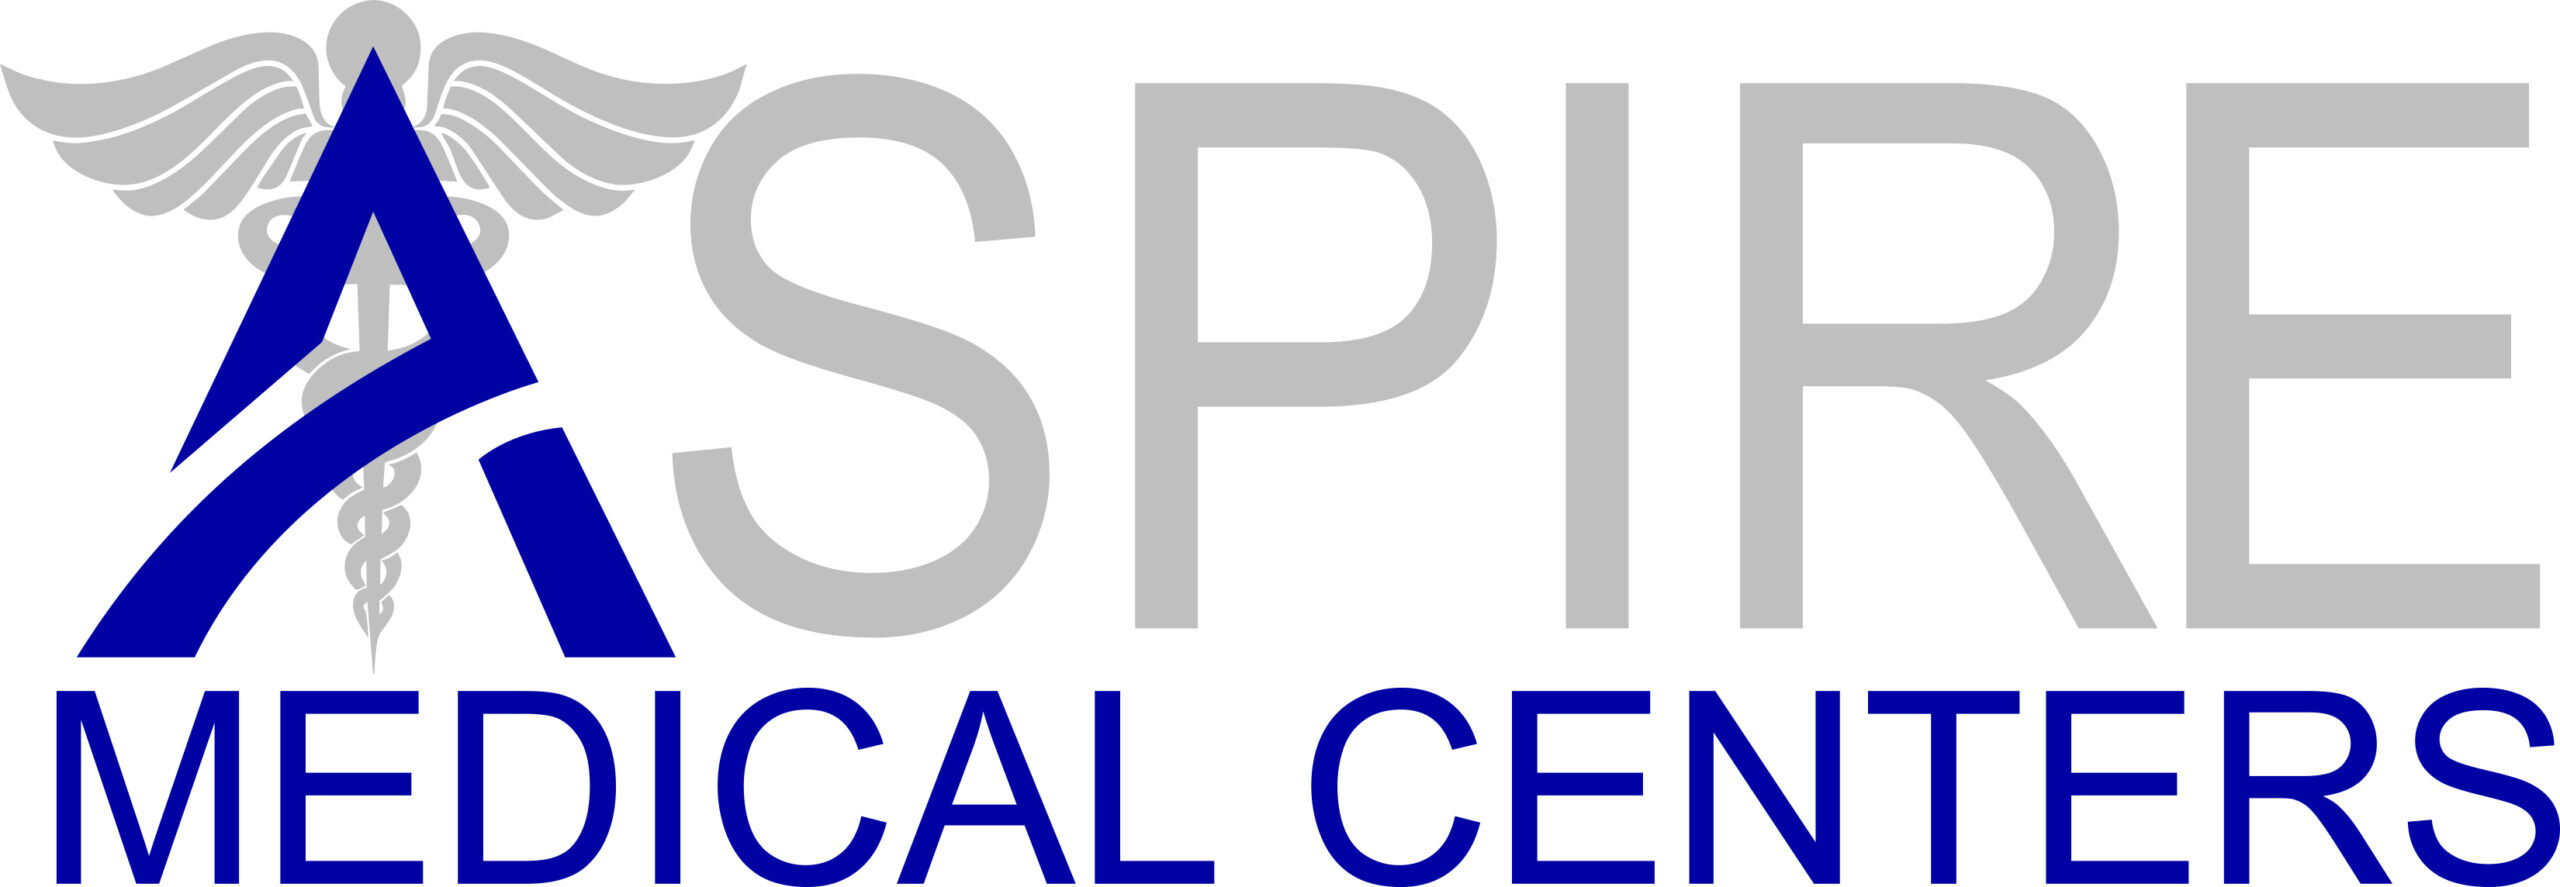 ASPIRE MEDICAL CENTER logo